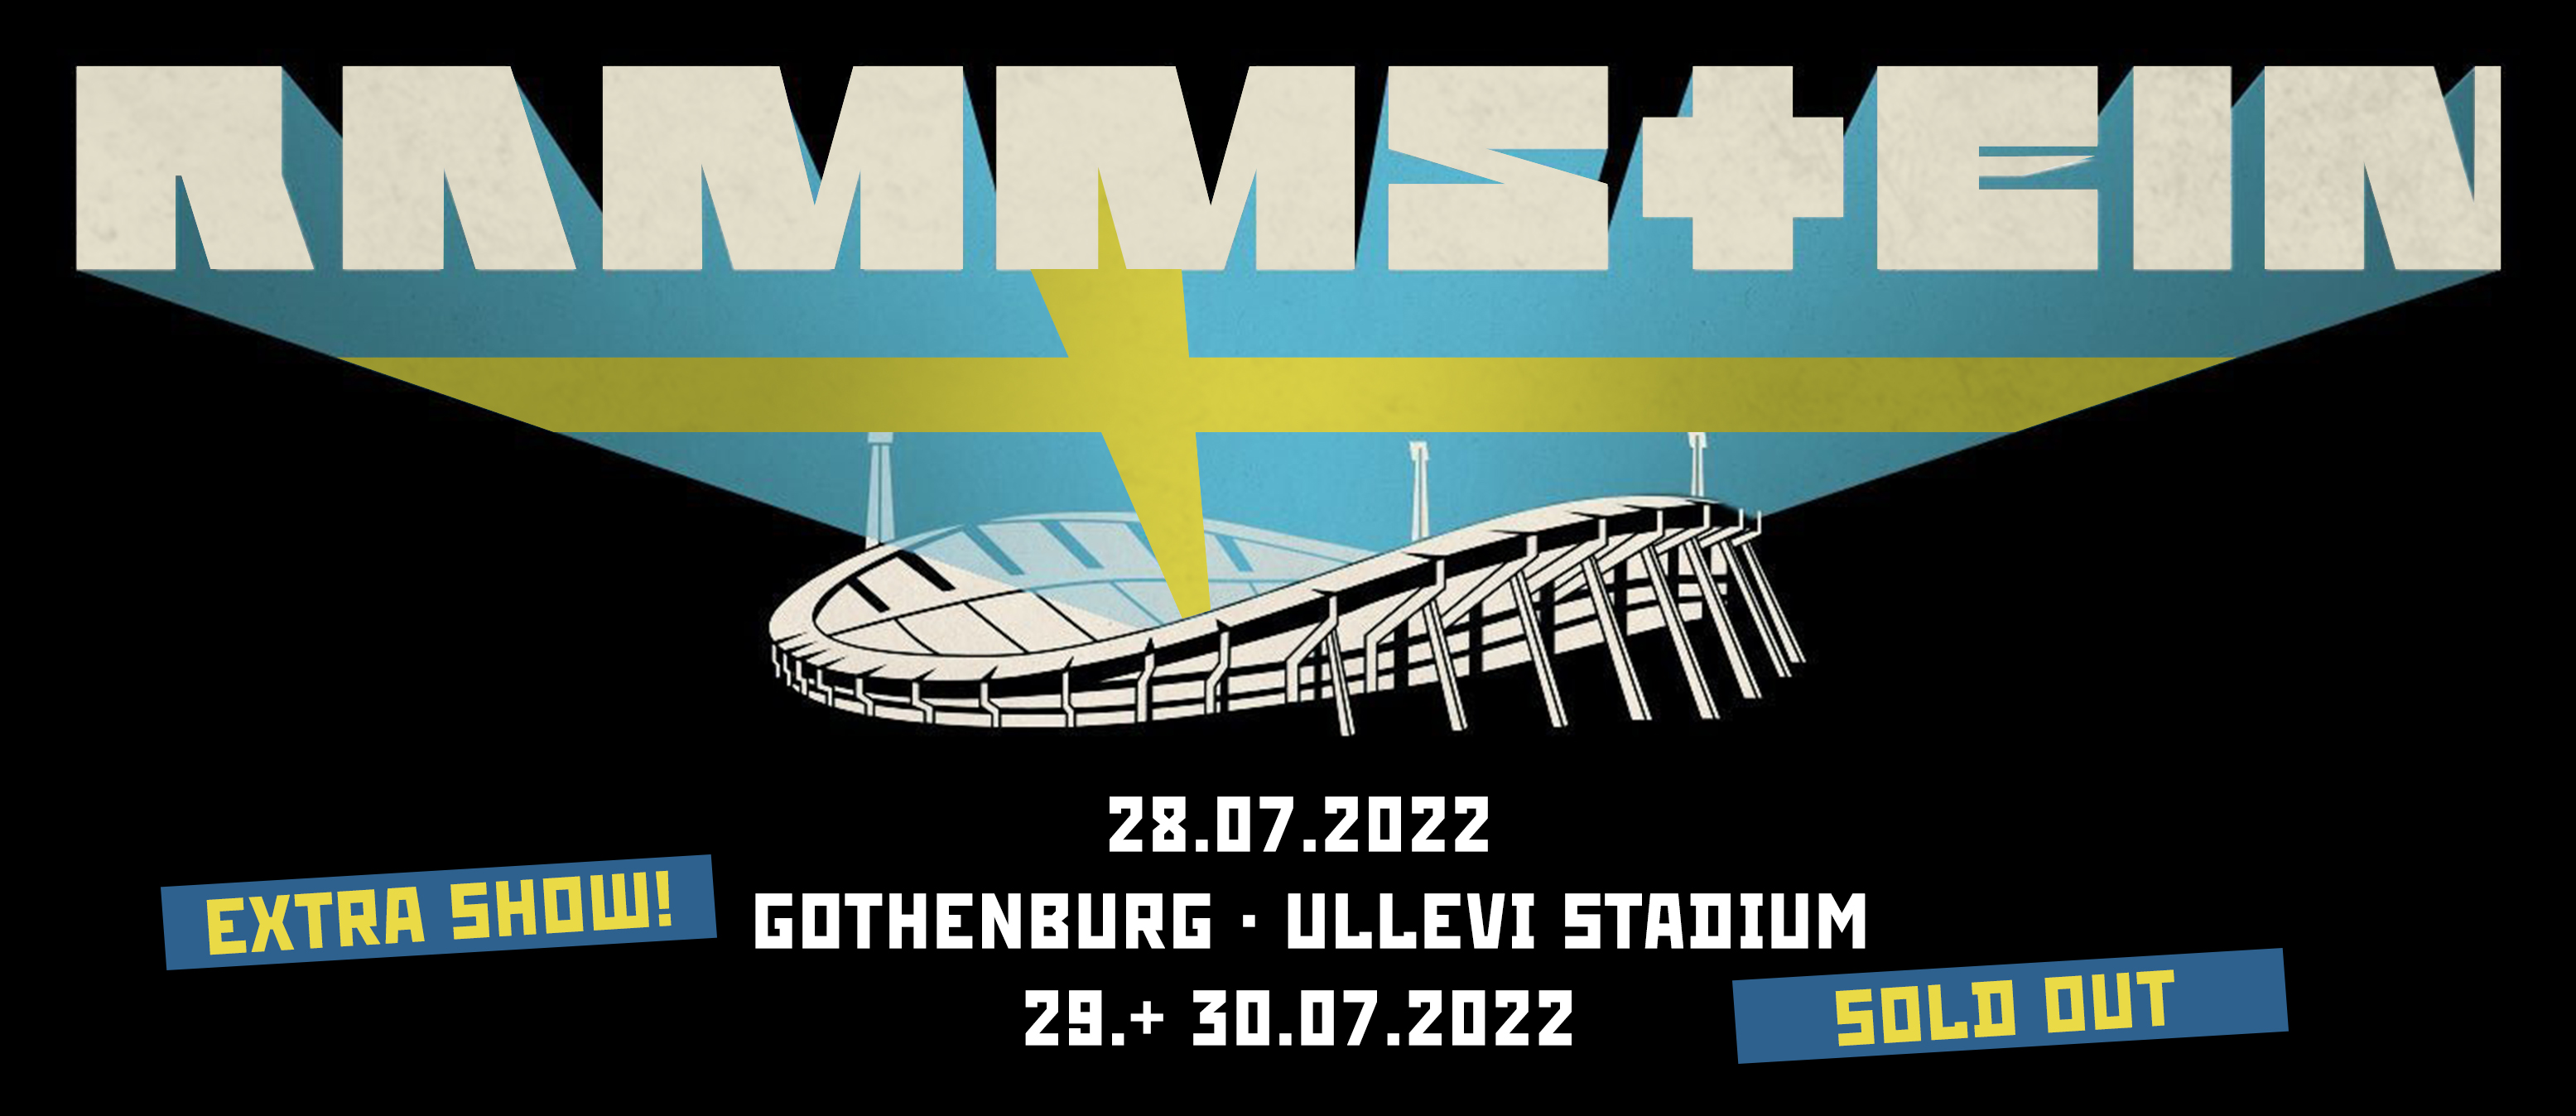 Nueva fecha Gotemburgo Ullevi Stadium 28.07.22